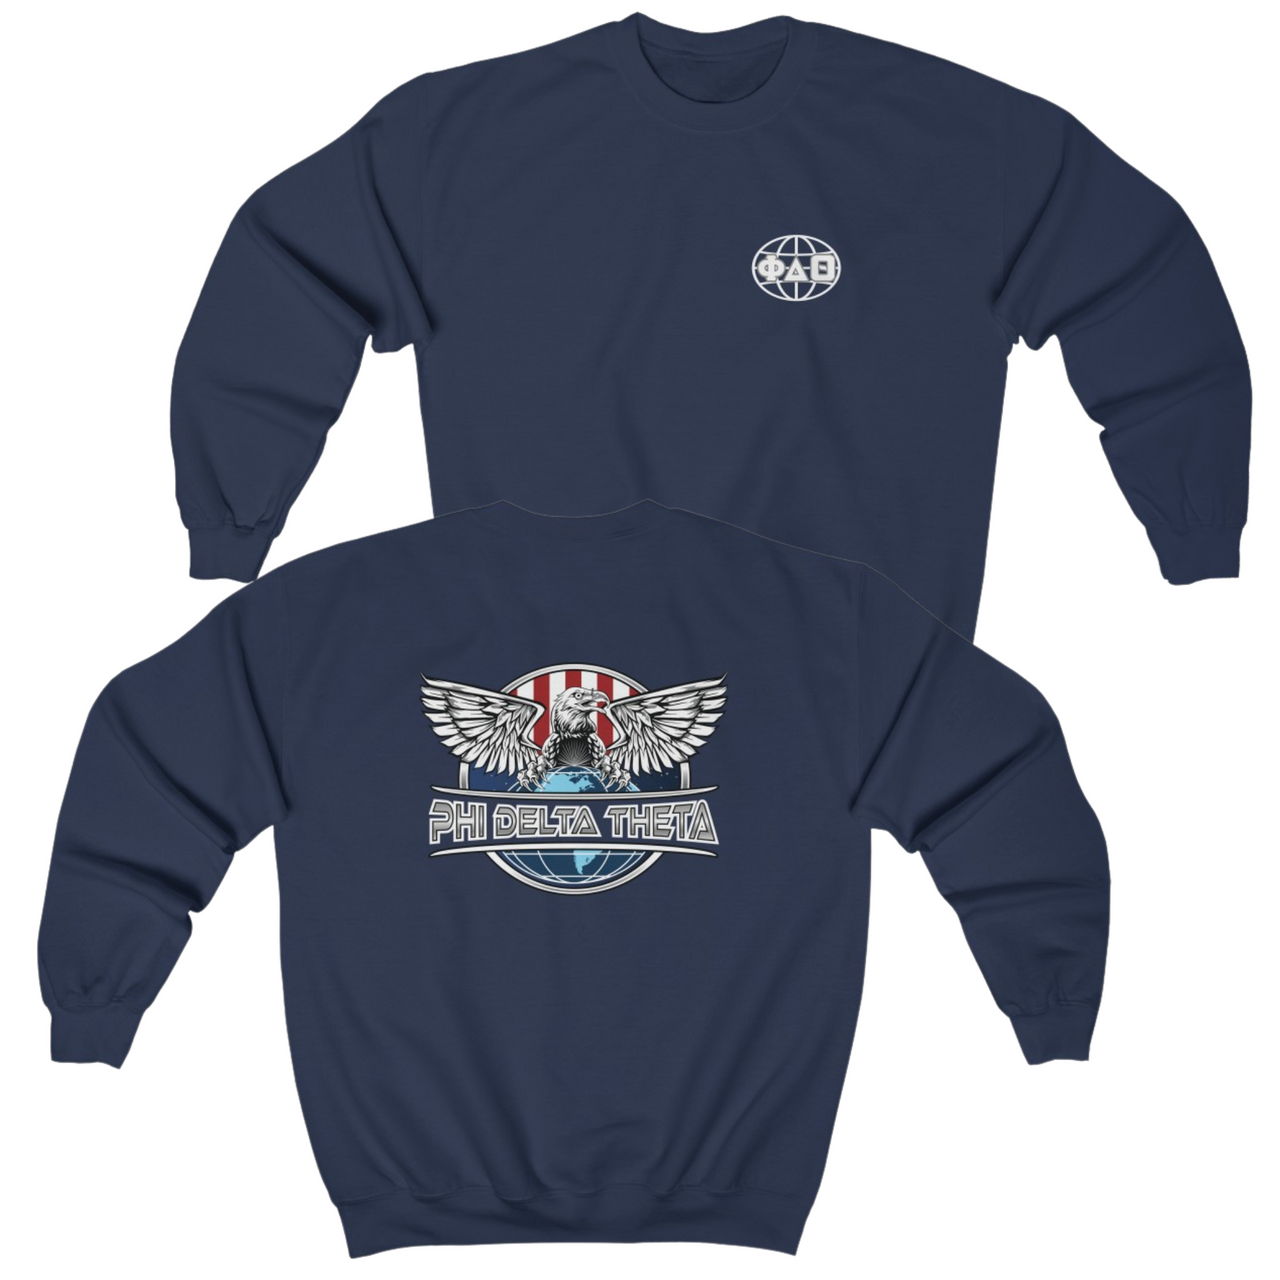 Navy Phi Delta Theta Graphic Crewneck Sweatshirt | The Fraternal Order | phi delta theta fraternity greek apparel 